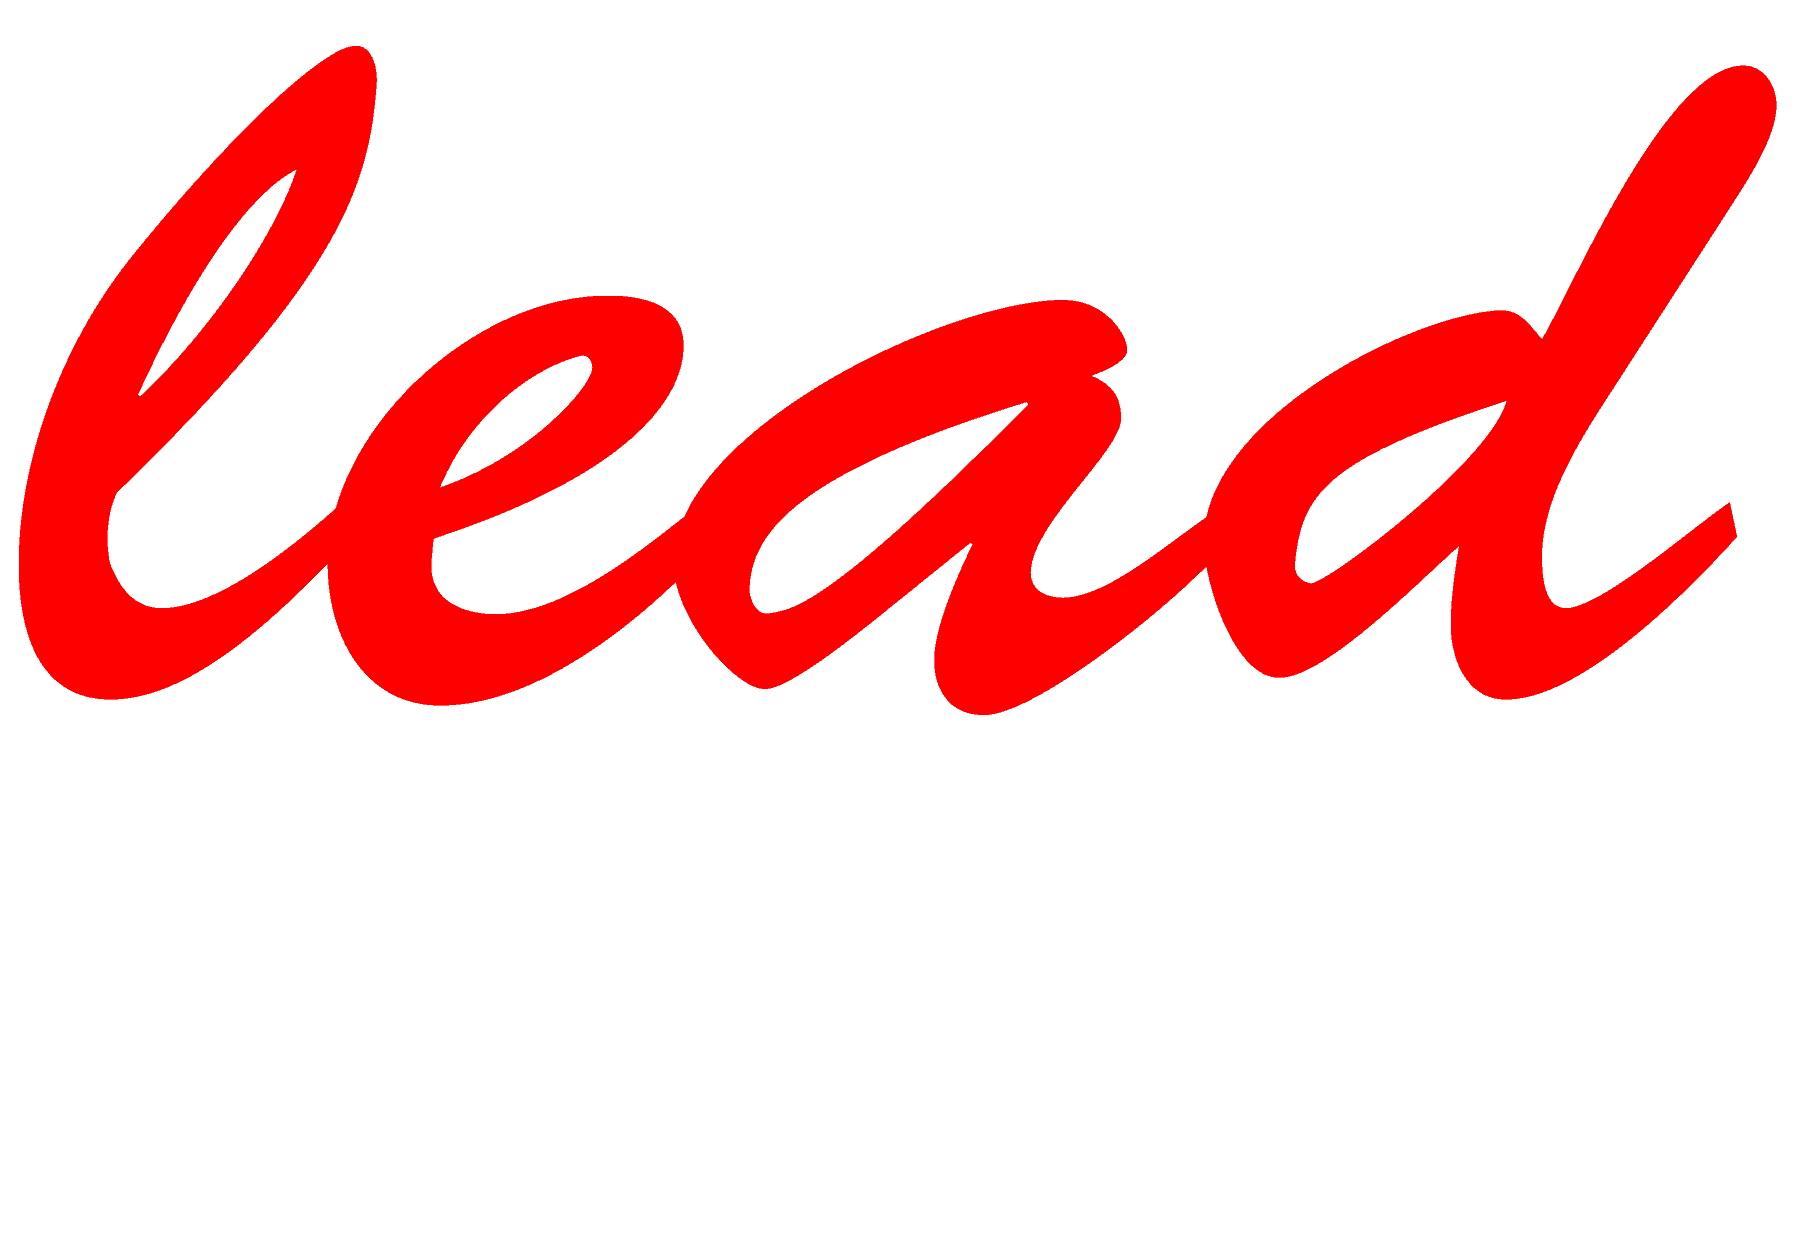 Lead Guitar Logo